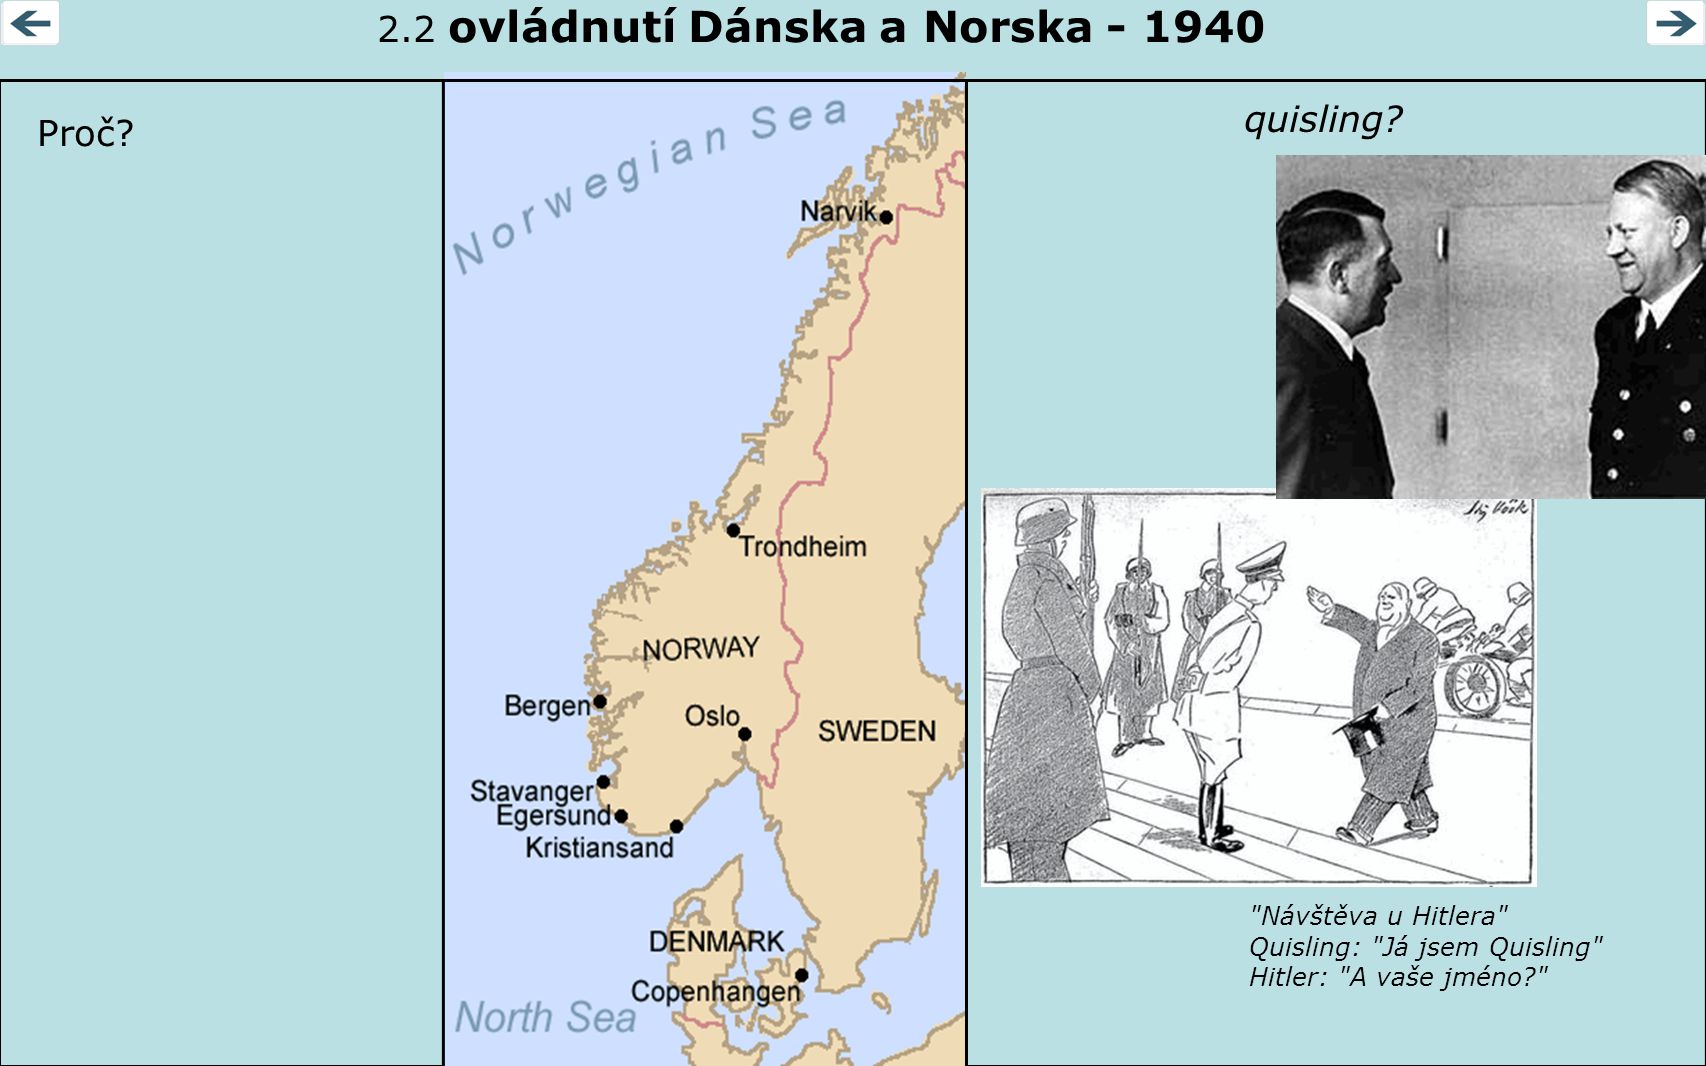 2.2 ovládnutí Dánska a Norska